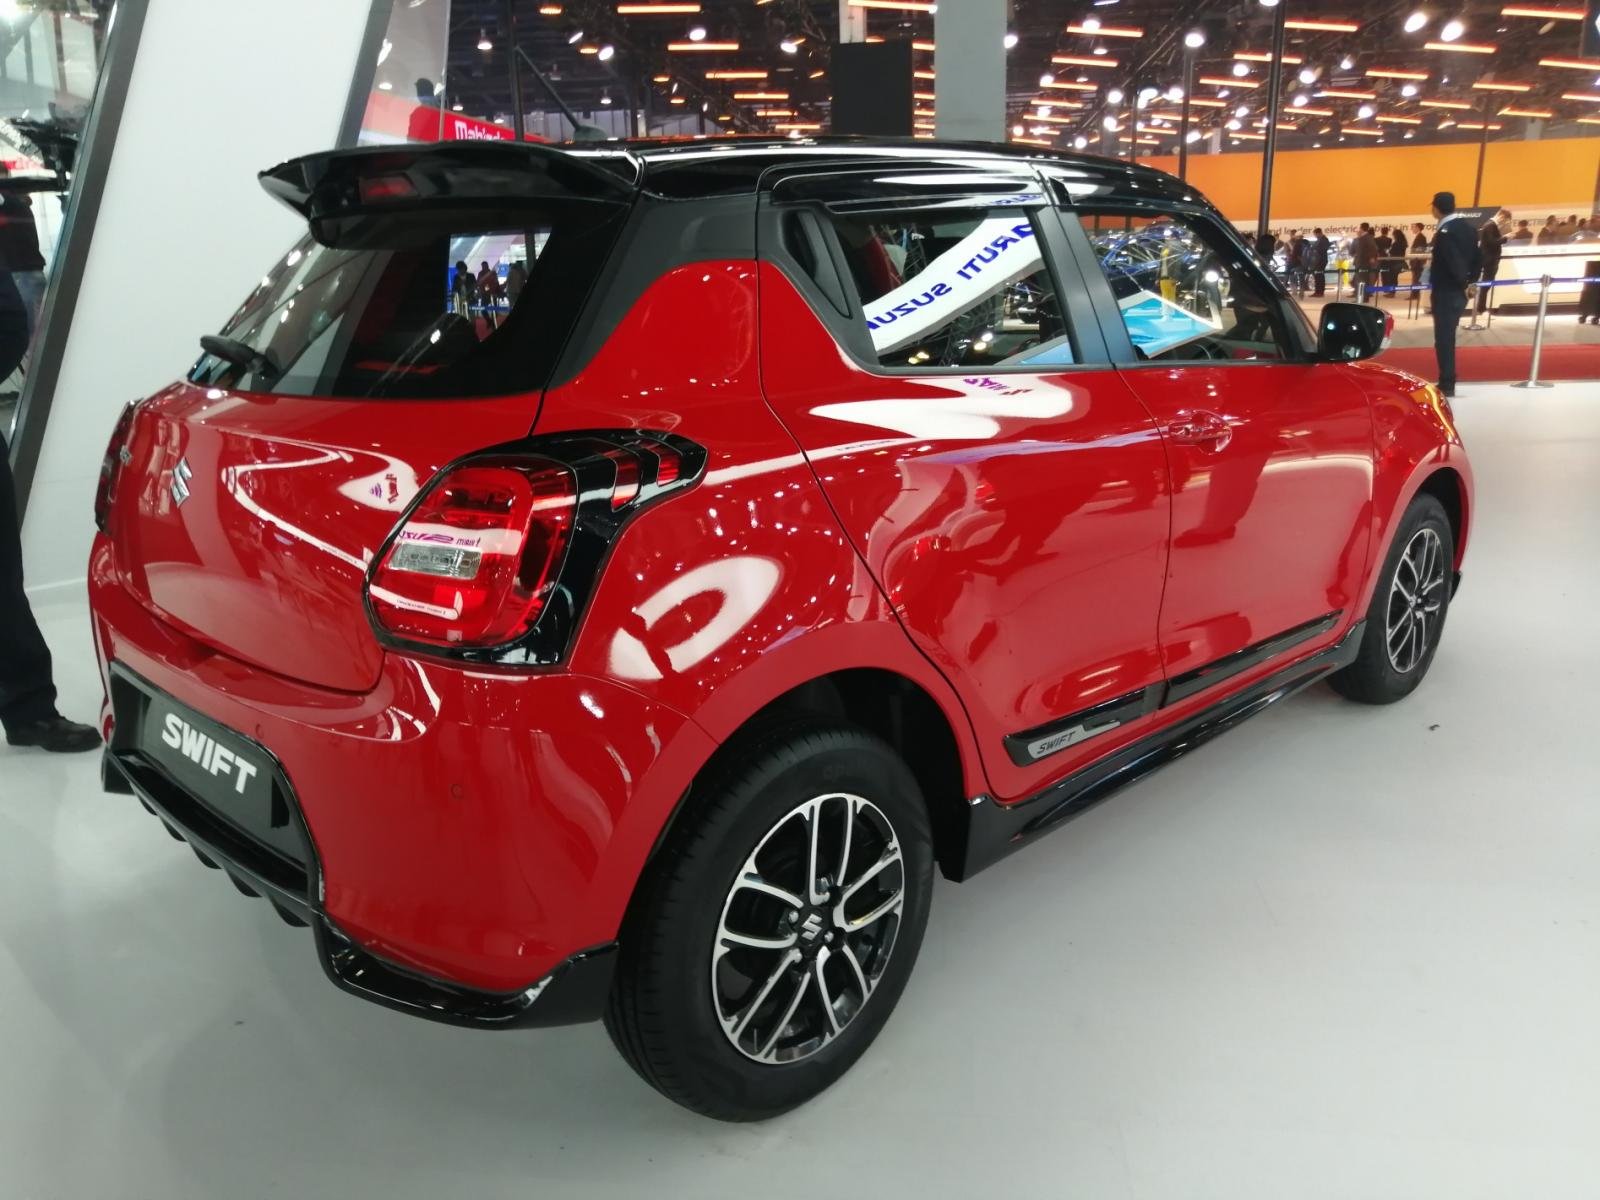 Maruti Cars at Auto Expo 2020 - Maruti Suzuki Swift Red & Black